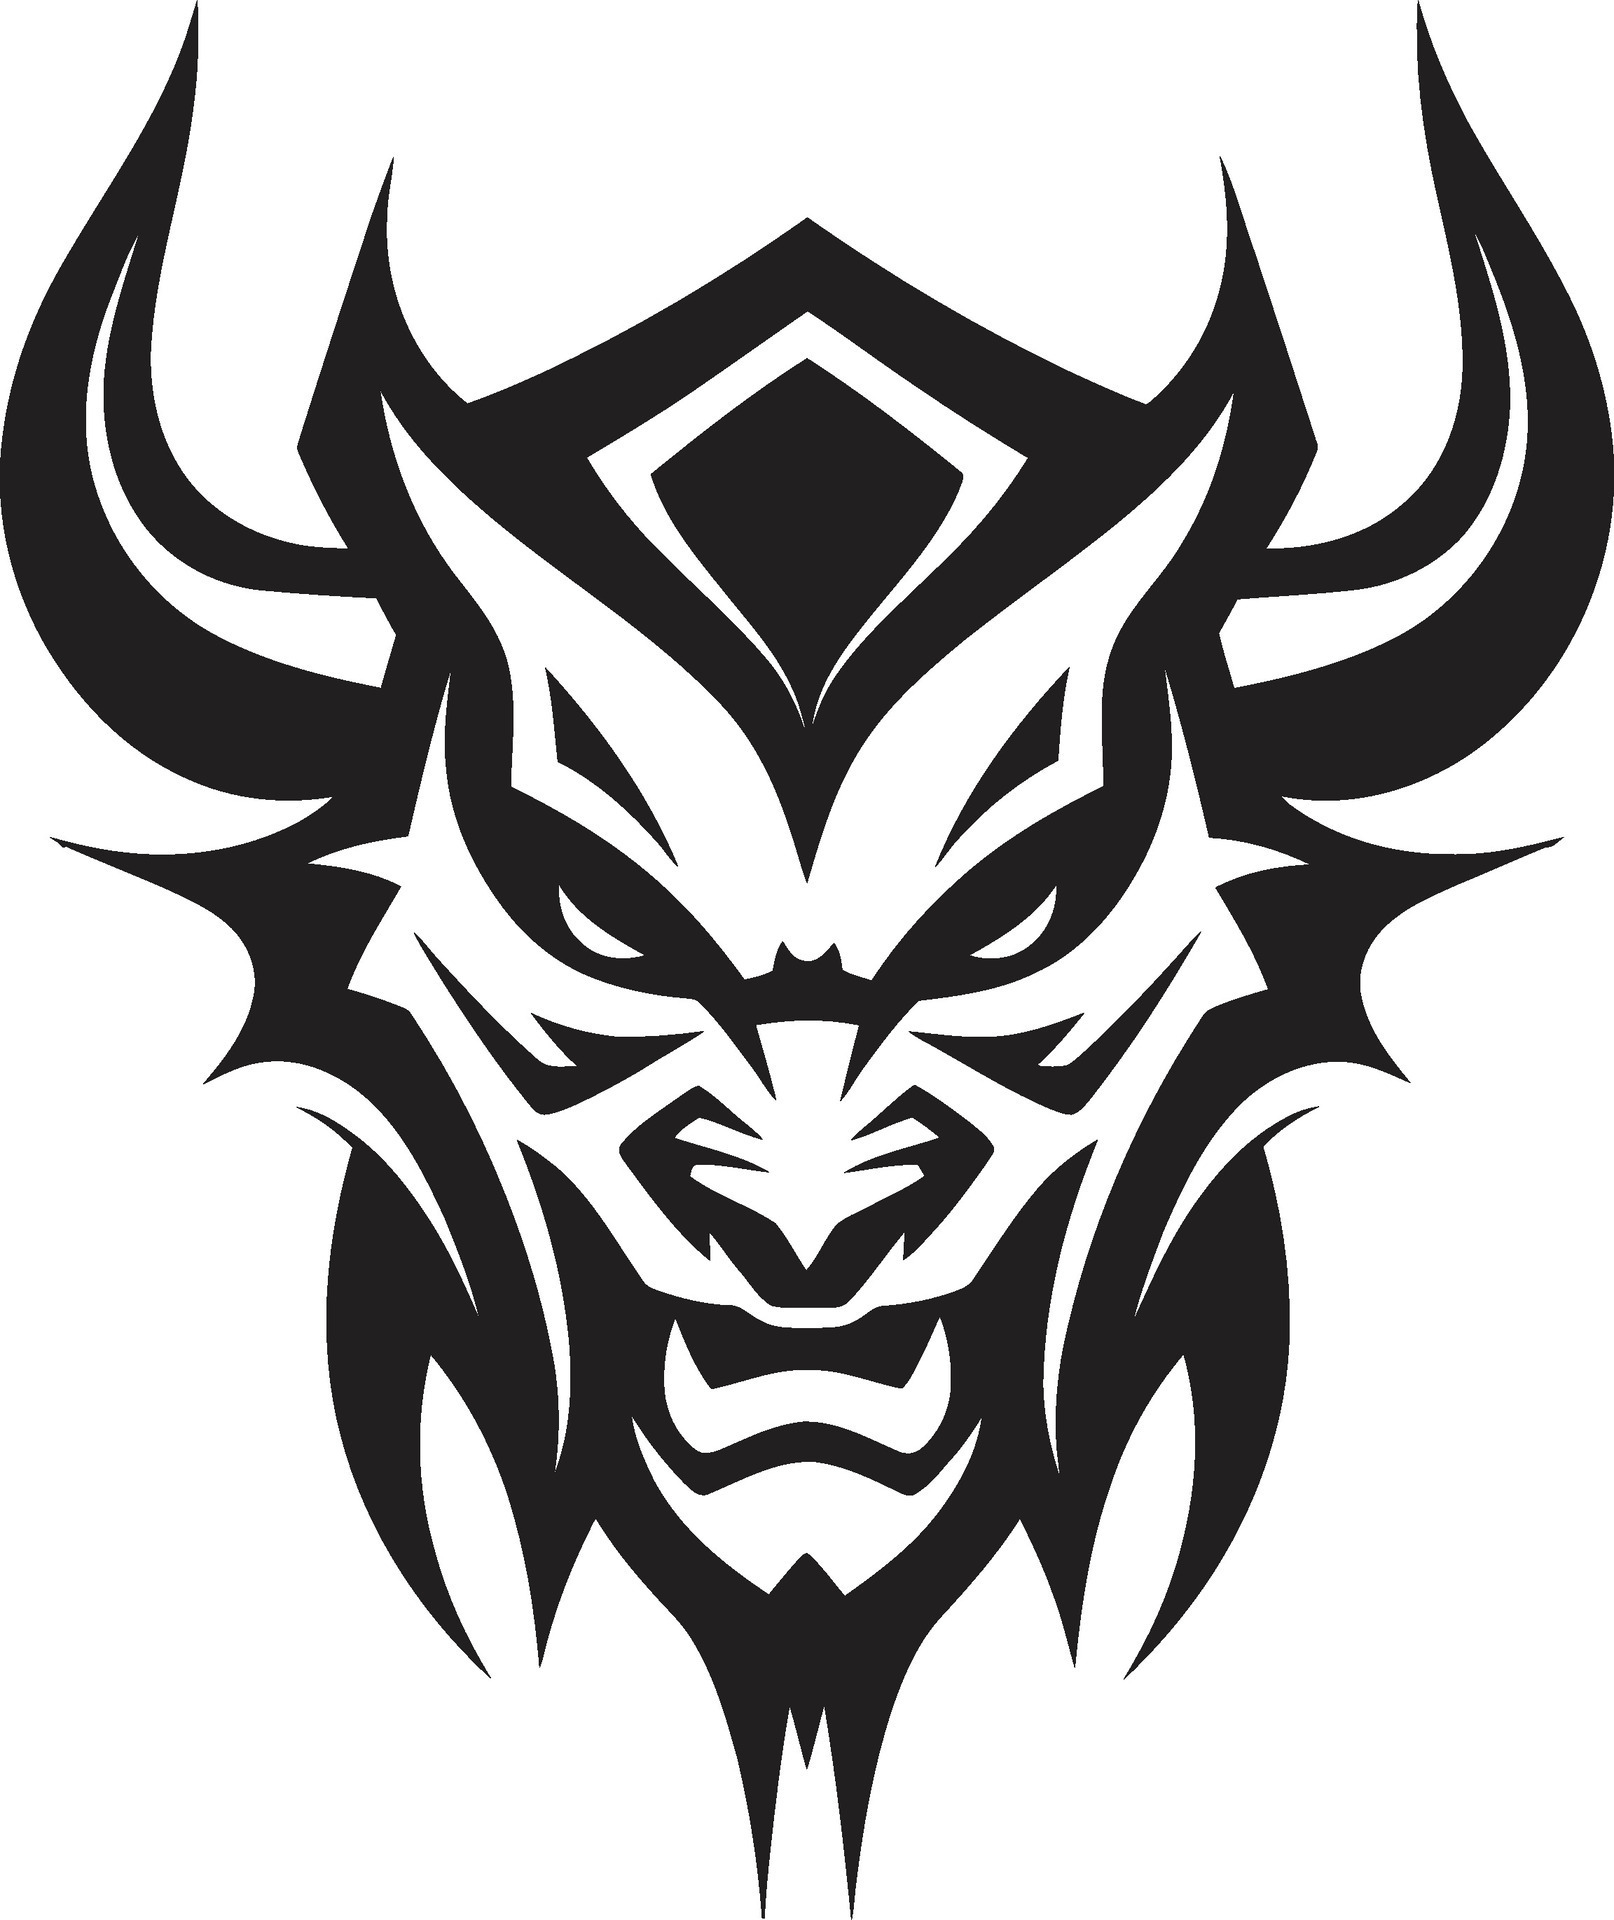 Inferno s Gaze Black Logo Symbolizing Aggressive Devil s Visage ...